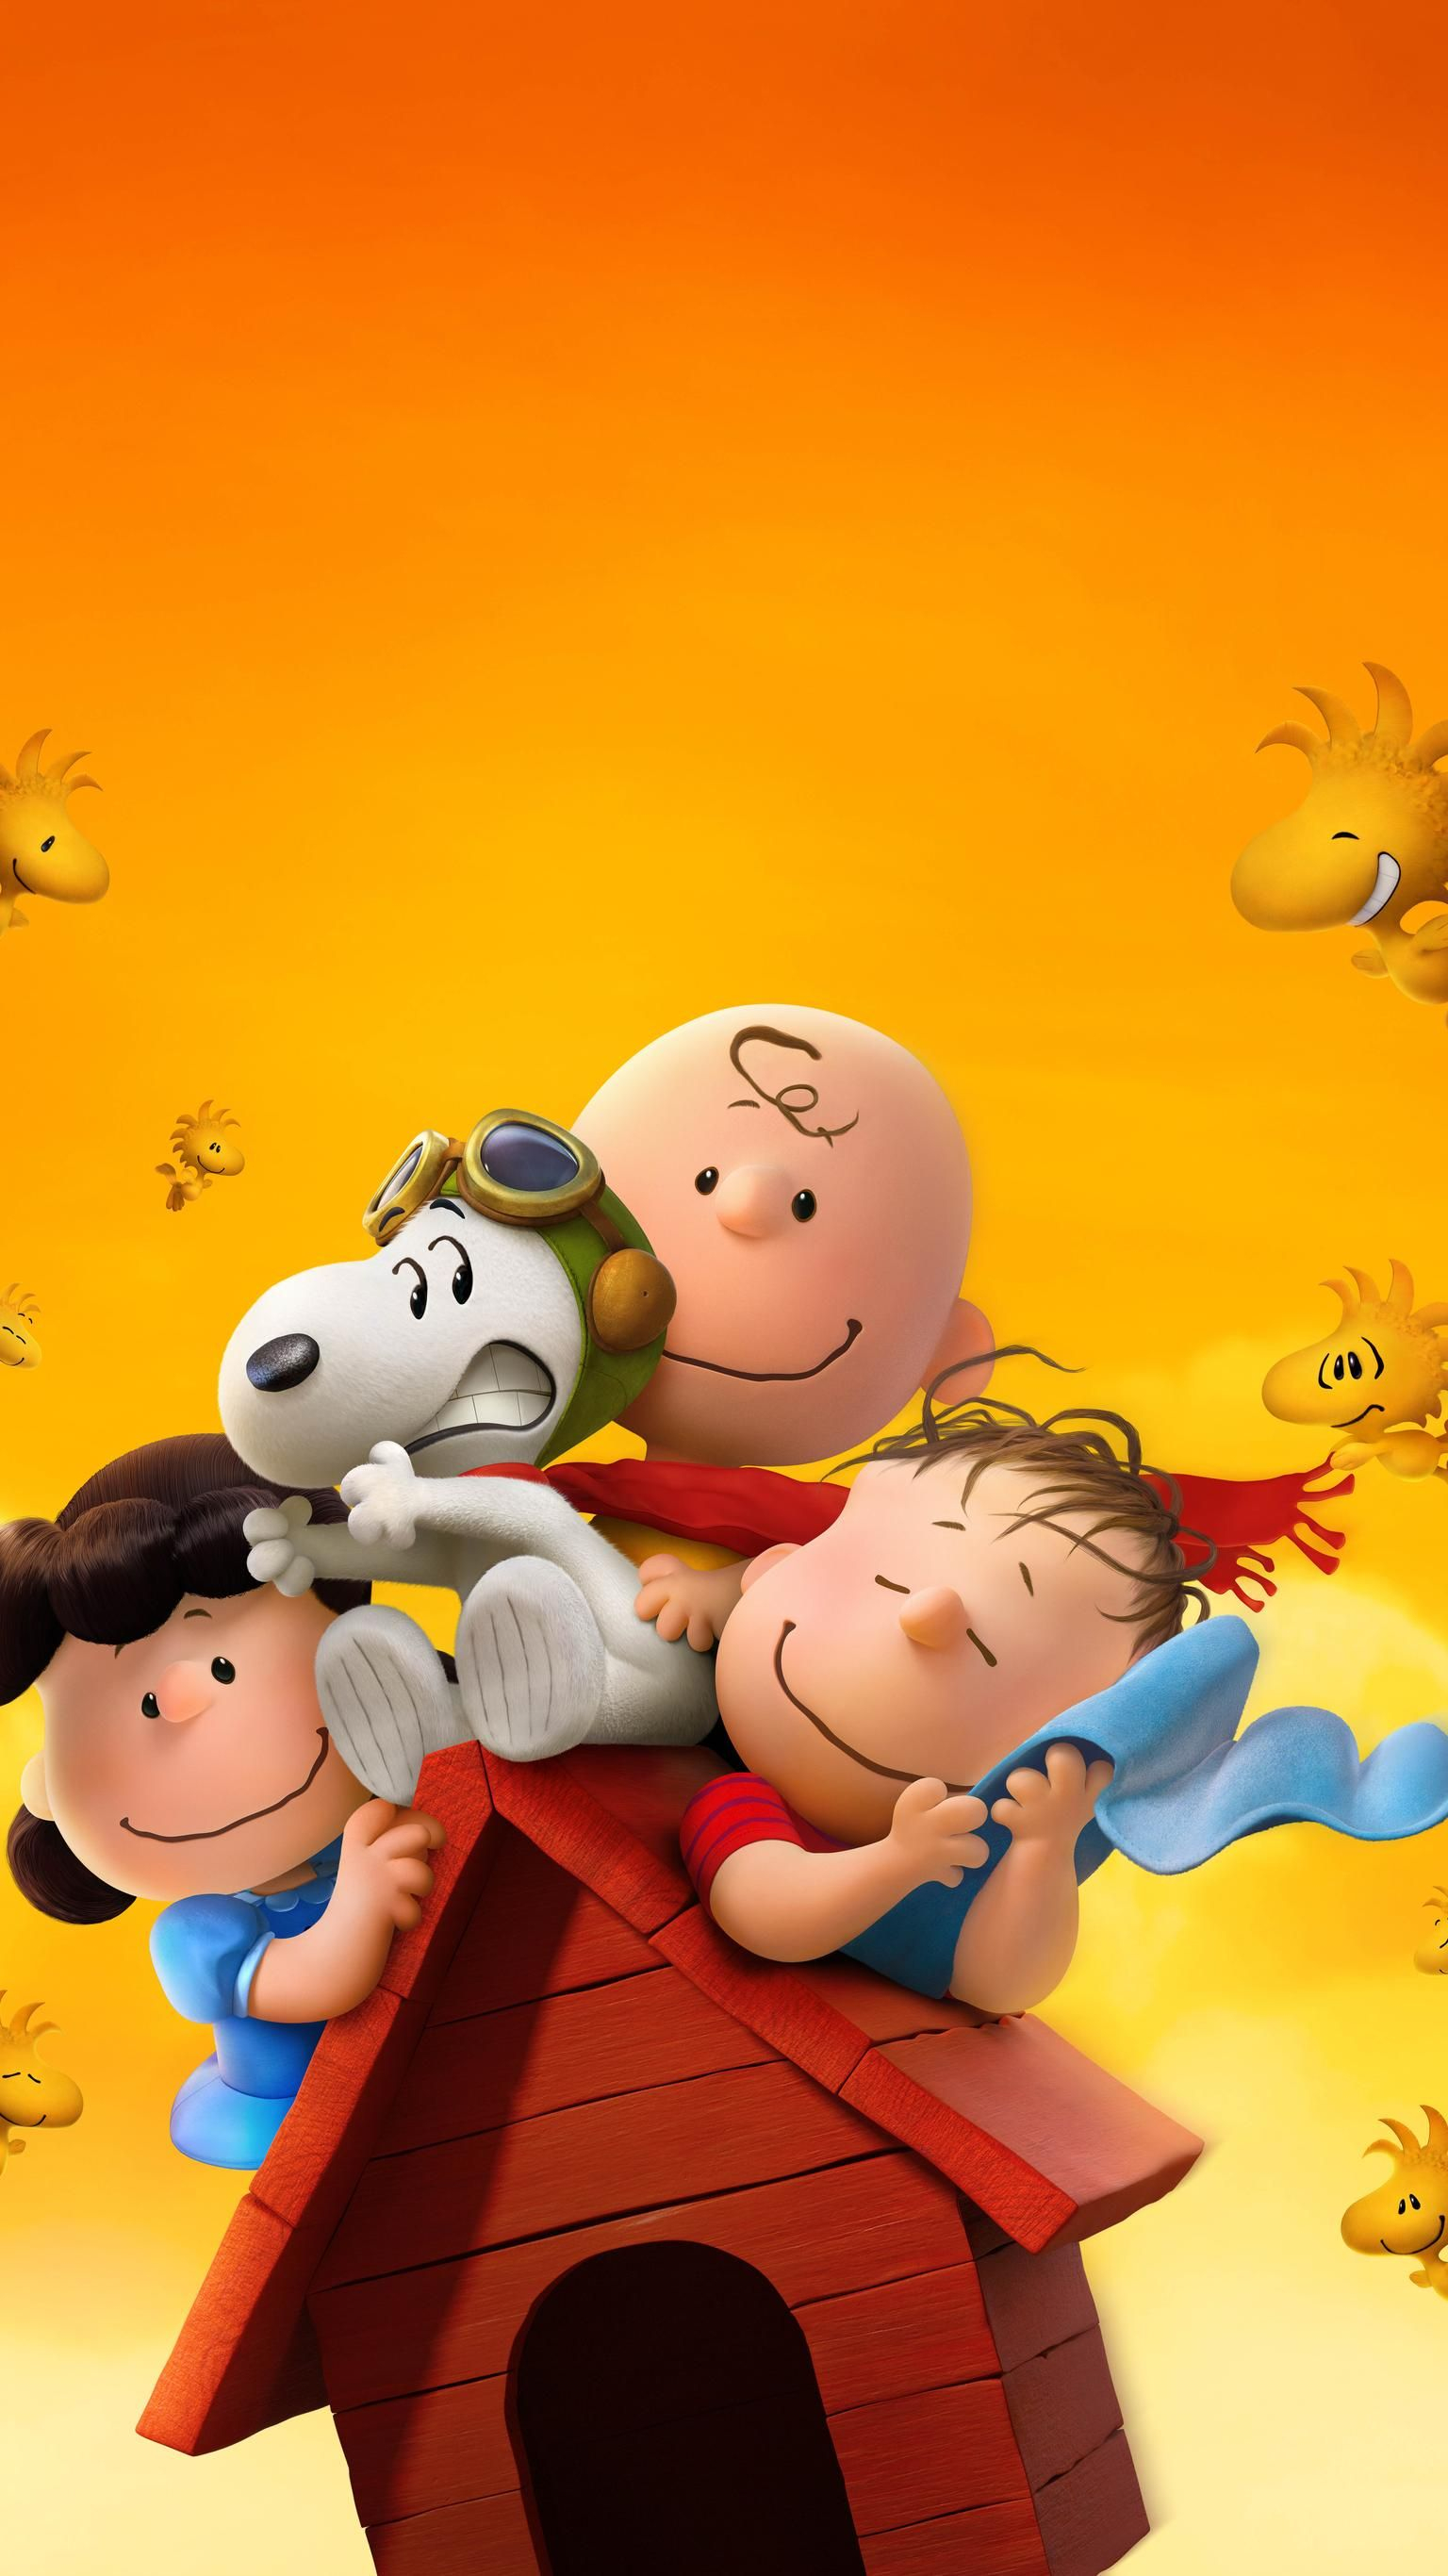 1536x2732 The Peanuts Movie (2015) Phone Wallpaper | Moviemania | Charlie brown wallpaper, Snoopy wallpaper, Peanuts wallpaper